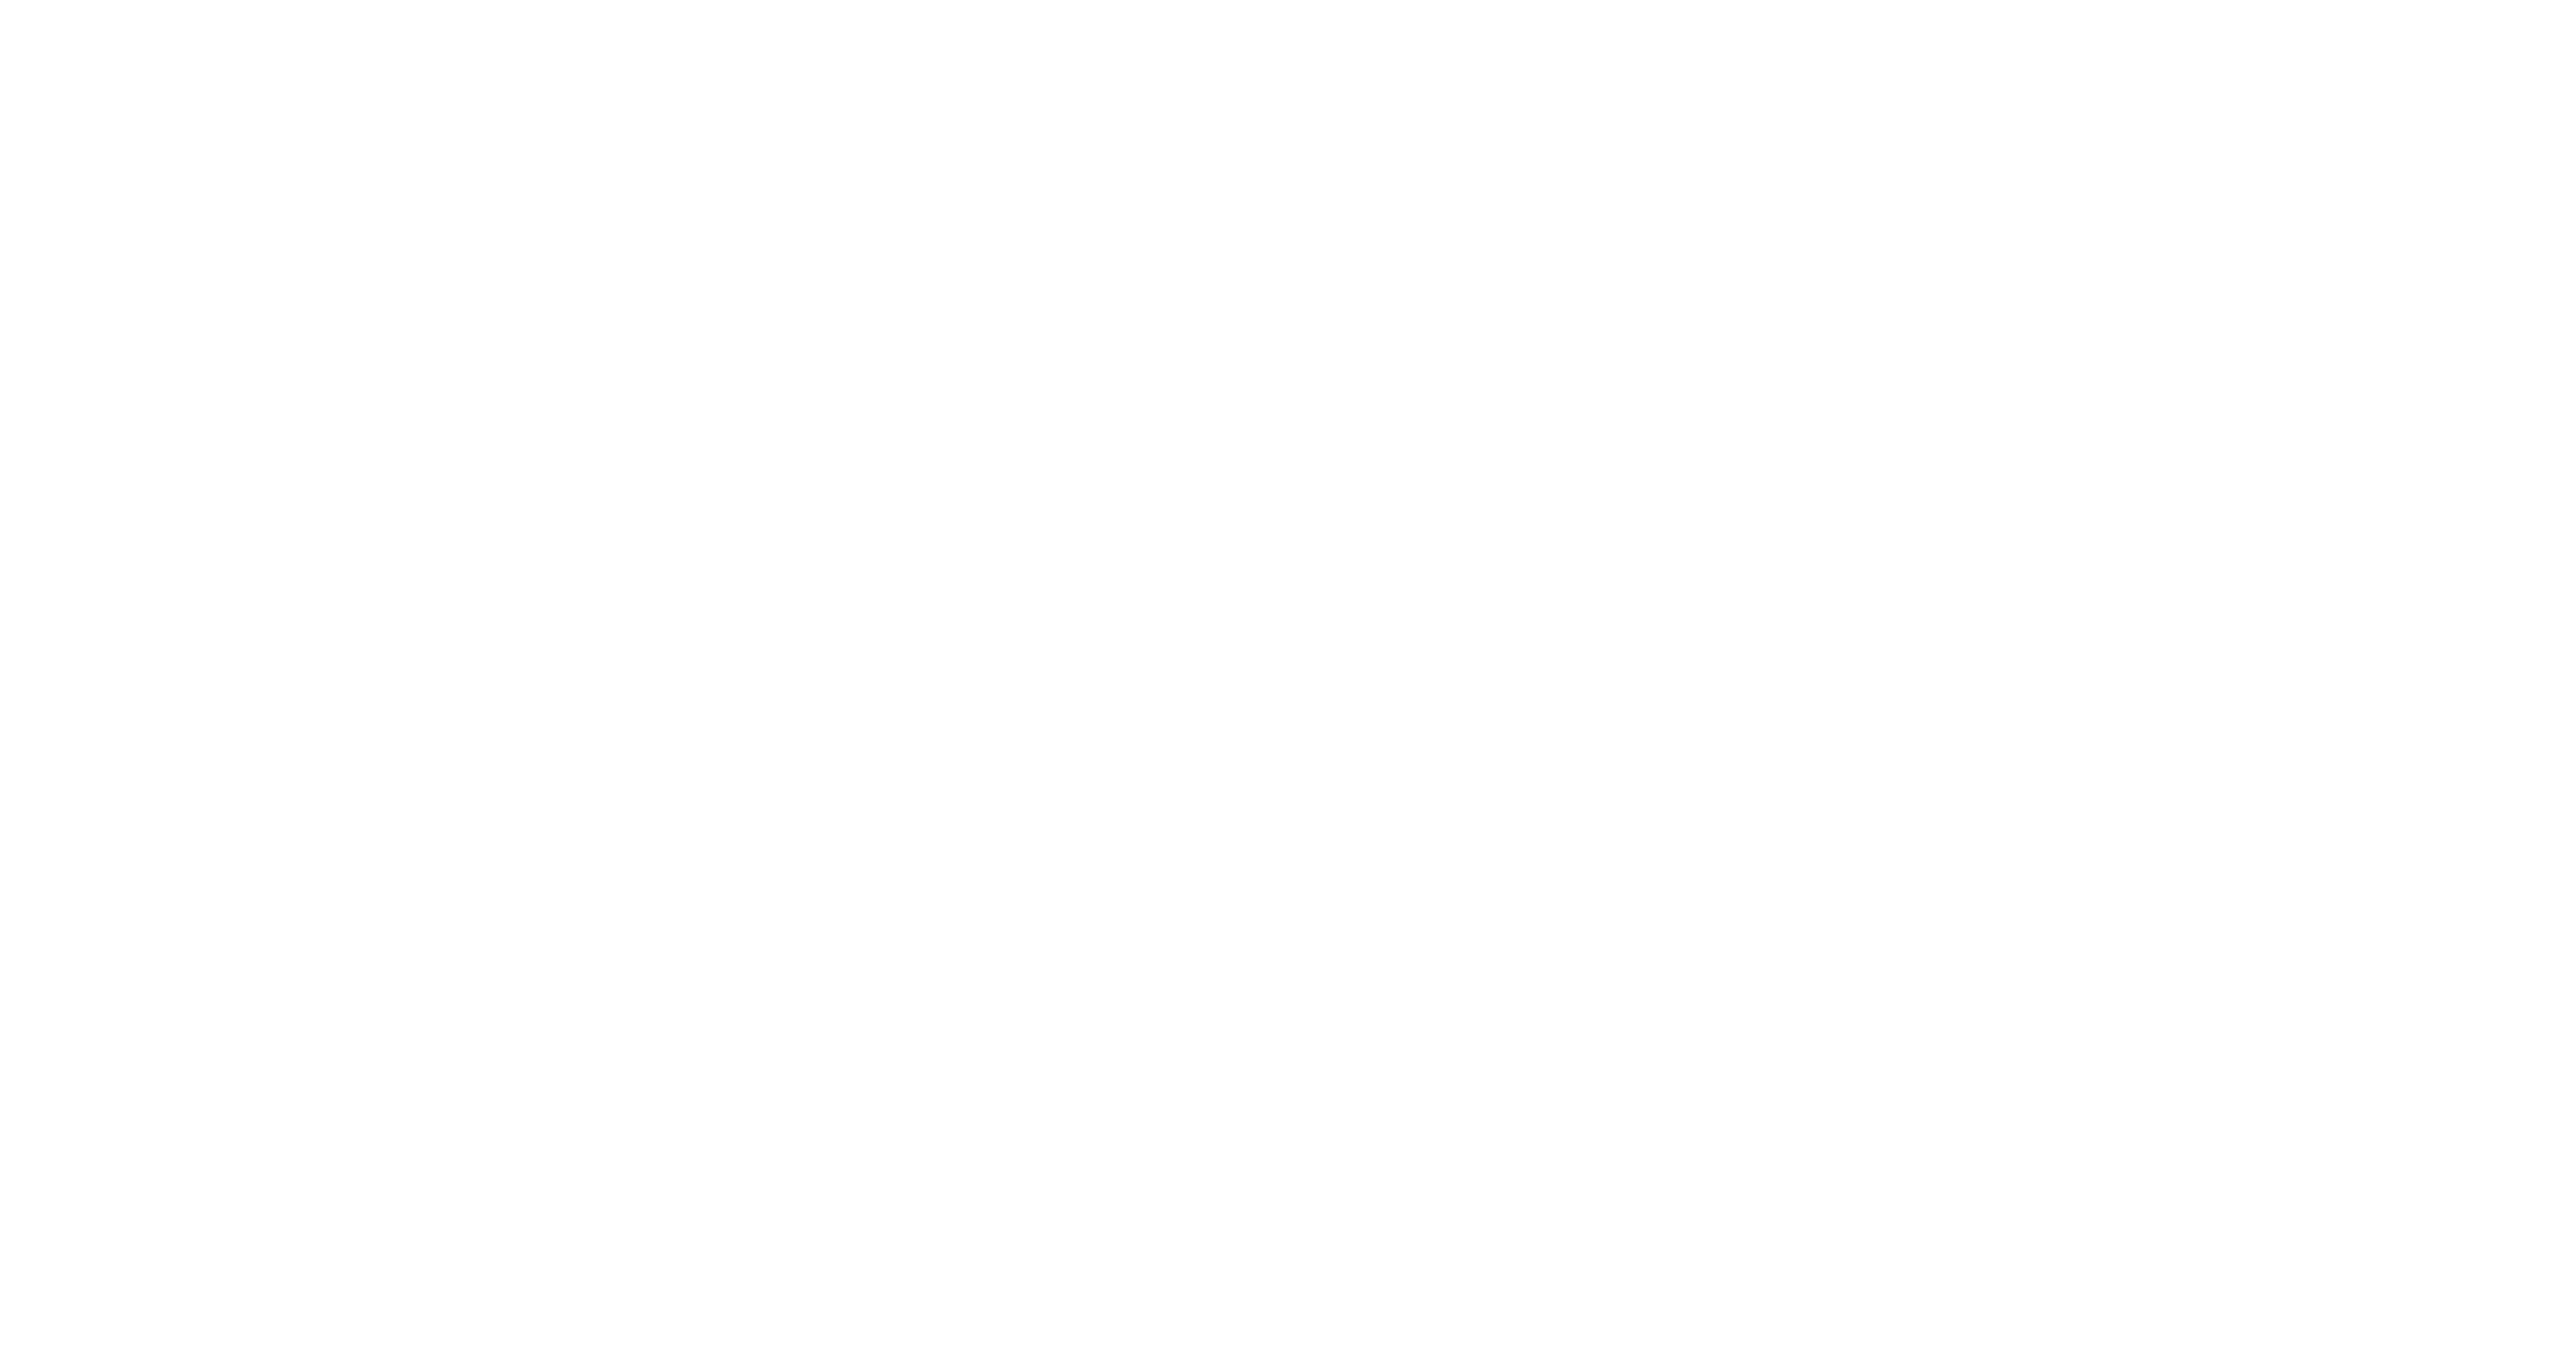 white-logo-the-mcrae-mortgage-team